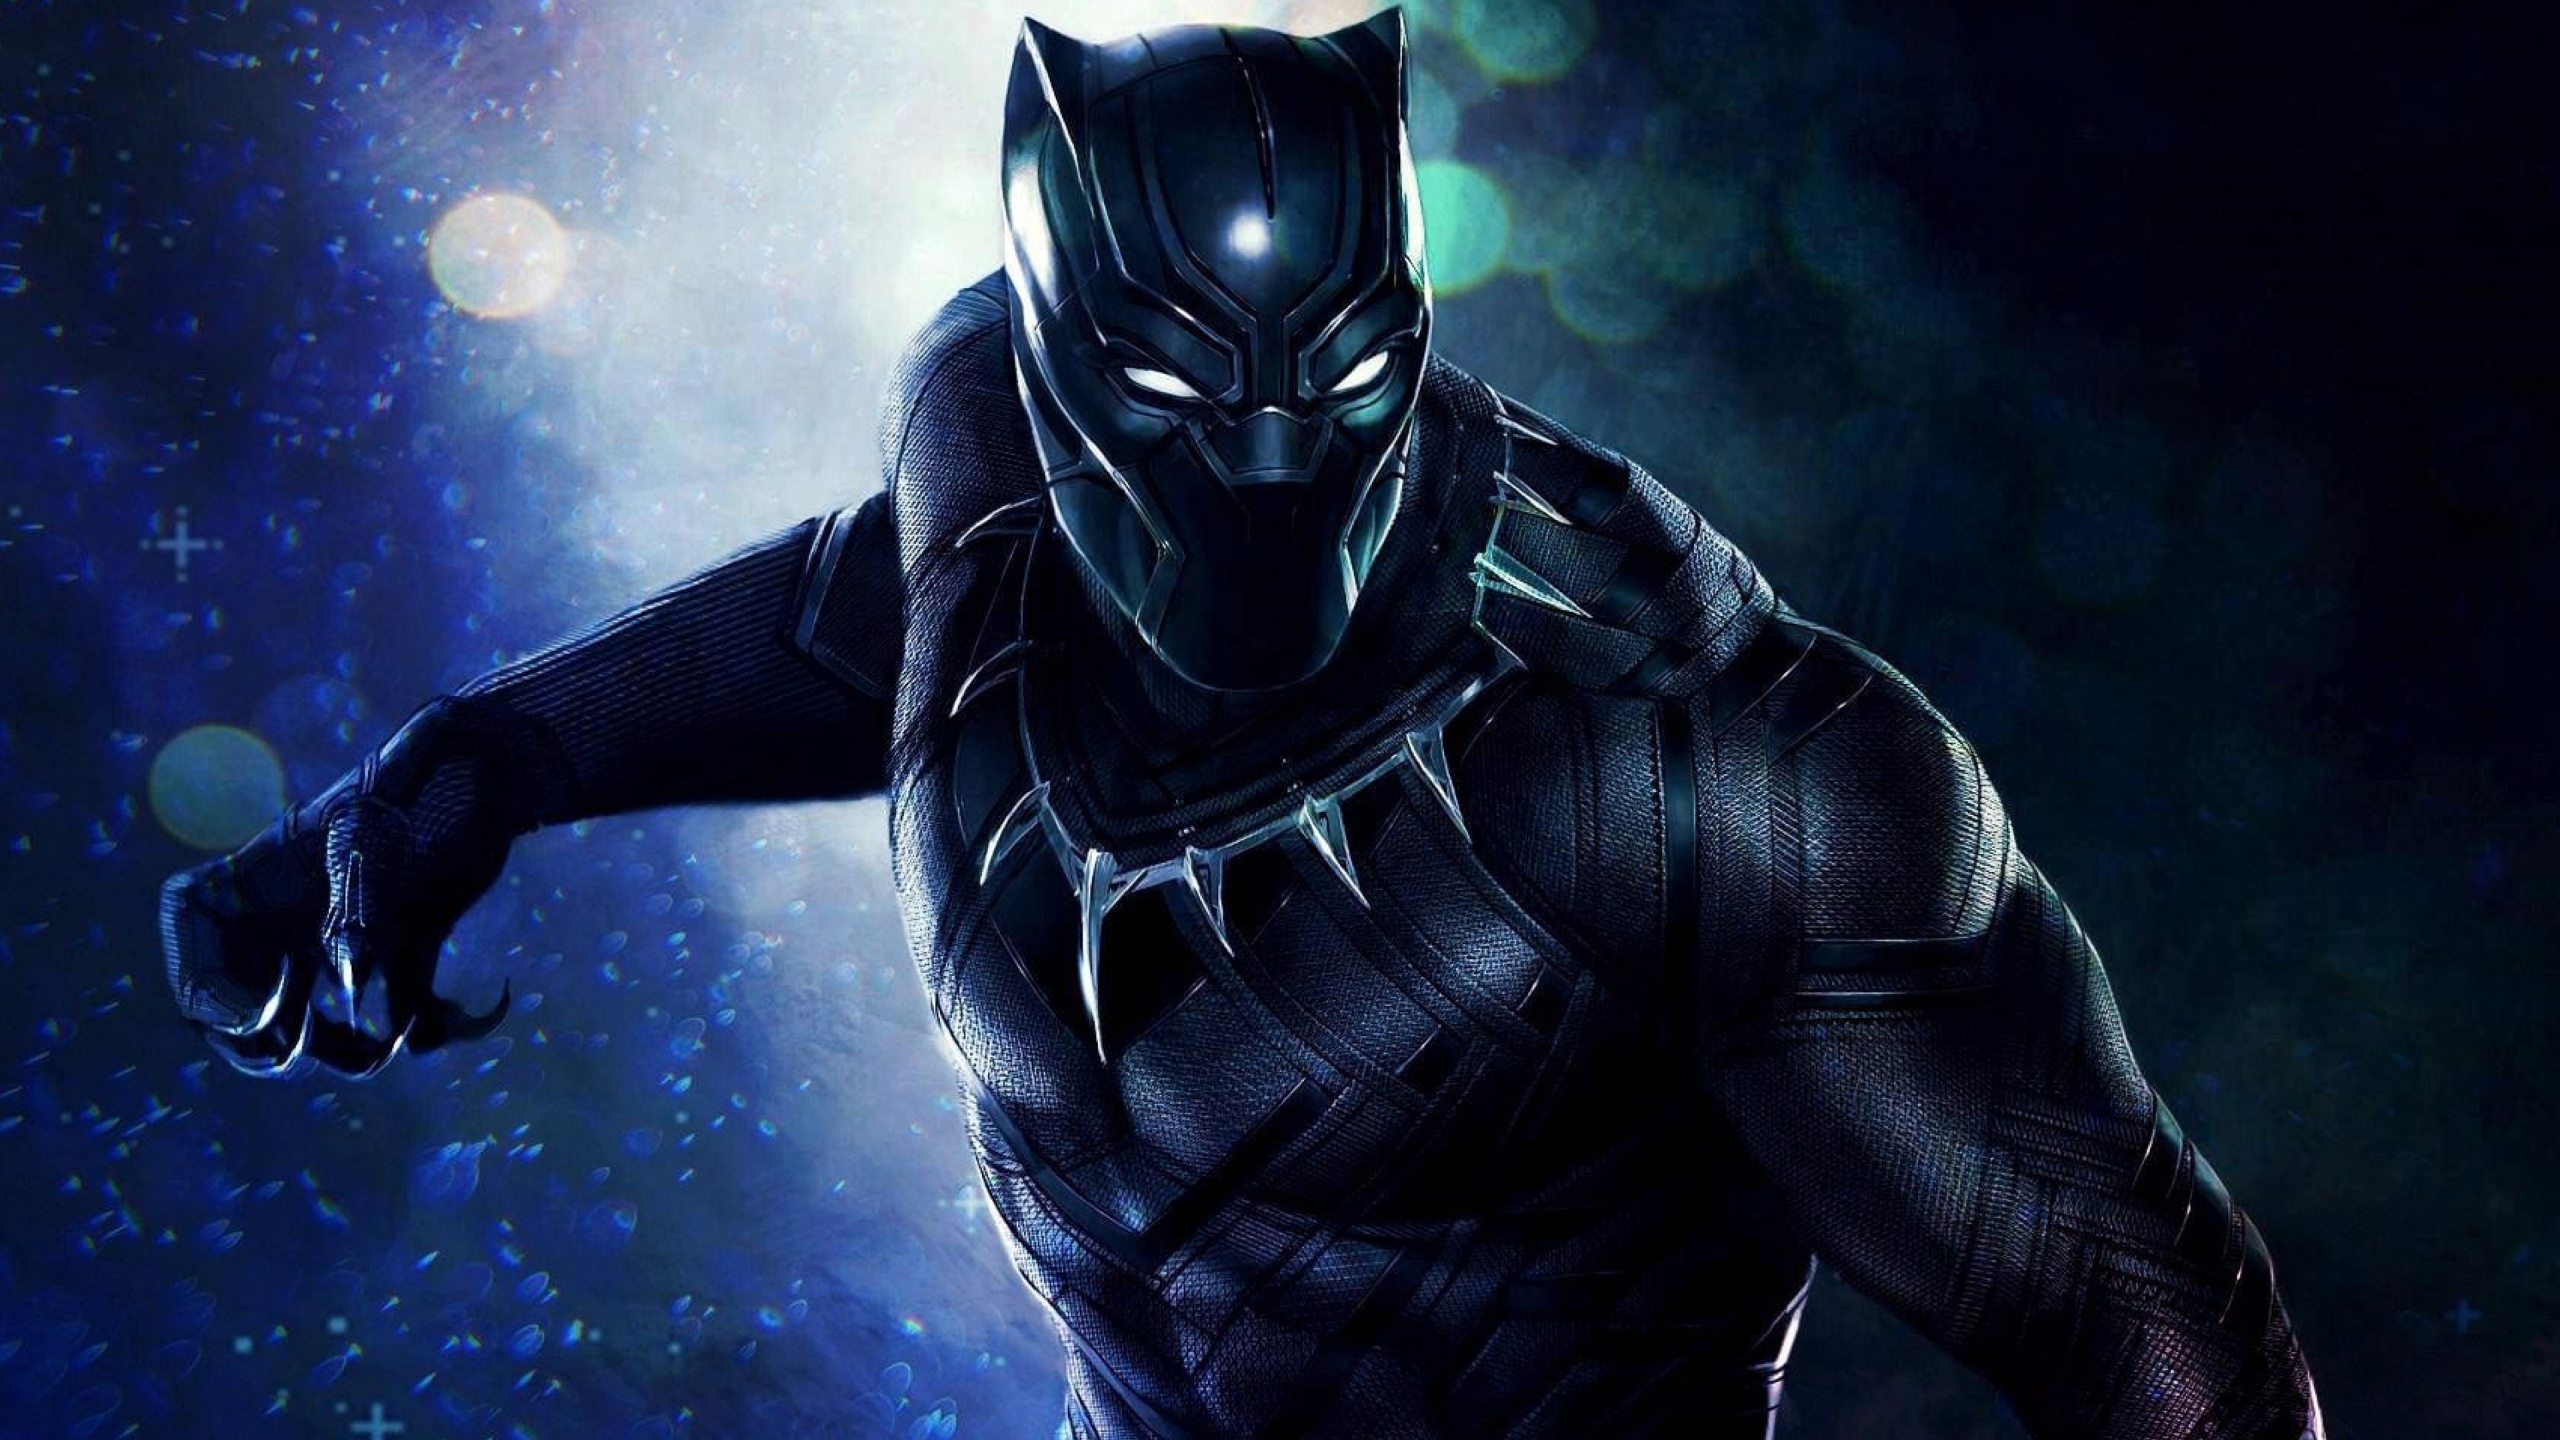 Download Wallpaper 2560x1440 Black Panther Superhero Artwork Dual